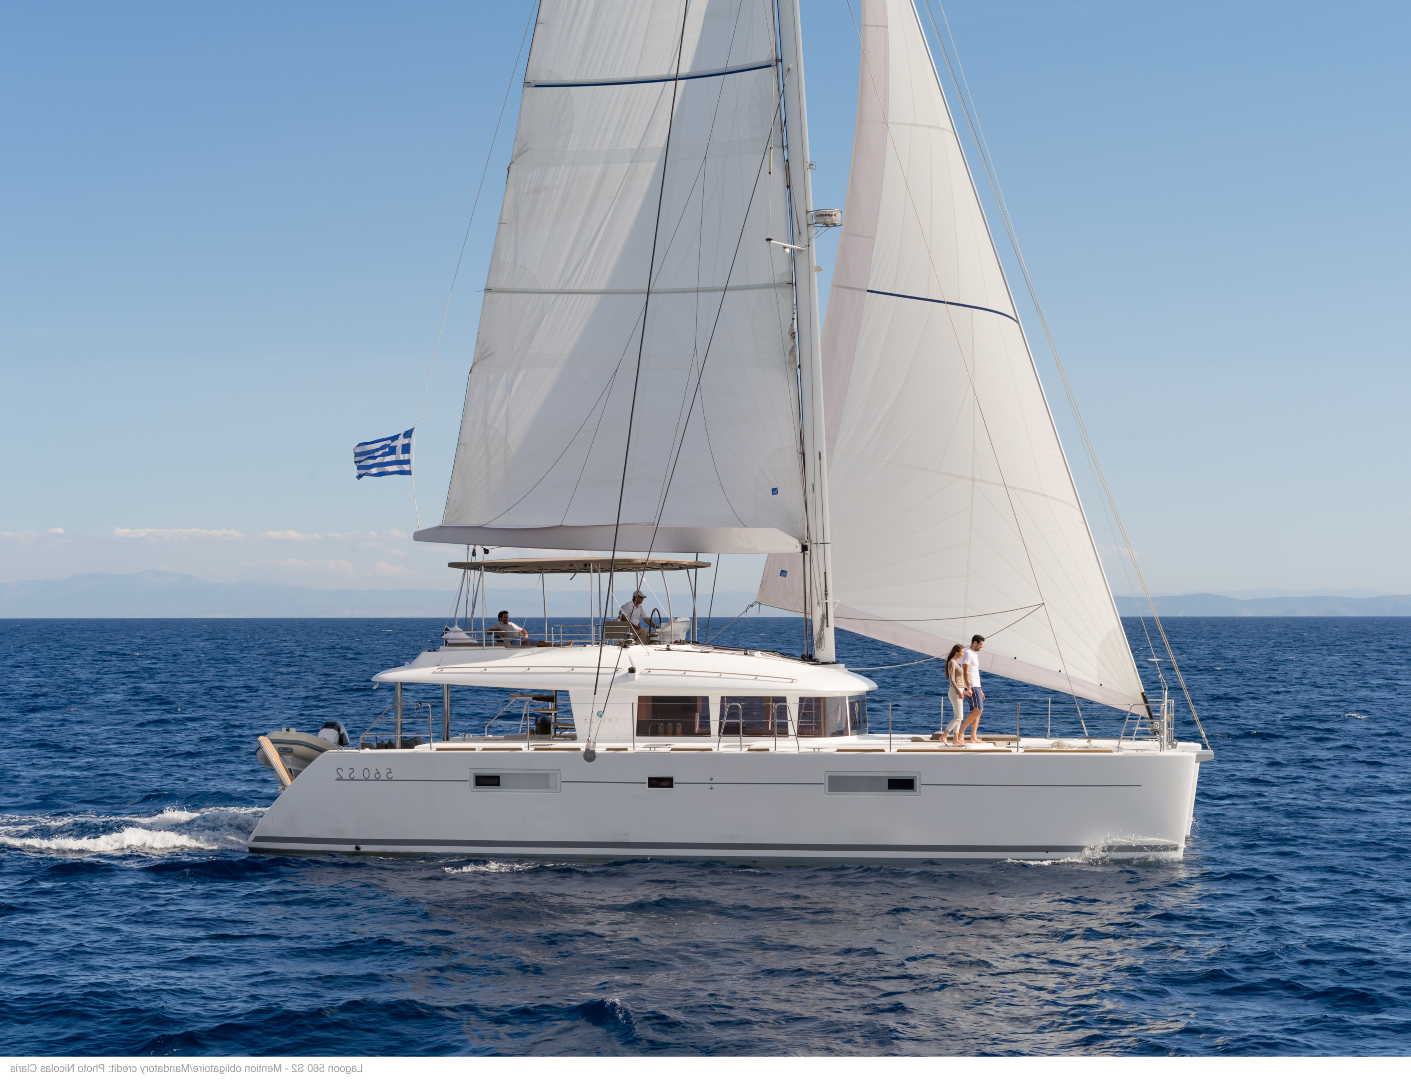 luxury-catamaran-yacht-Moya-side-view